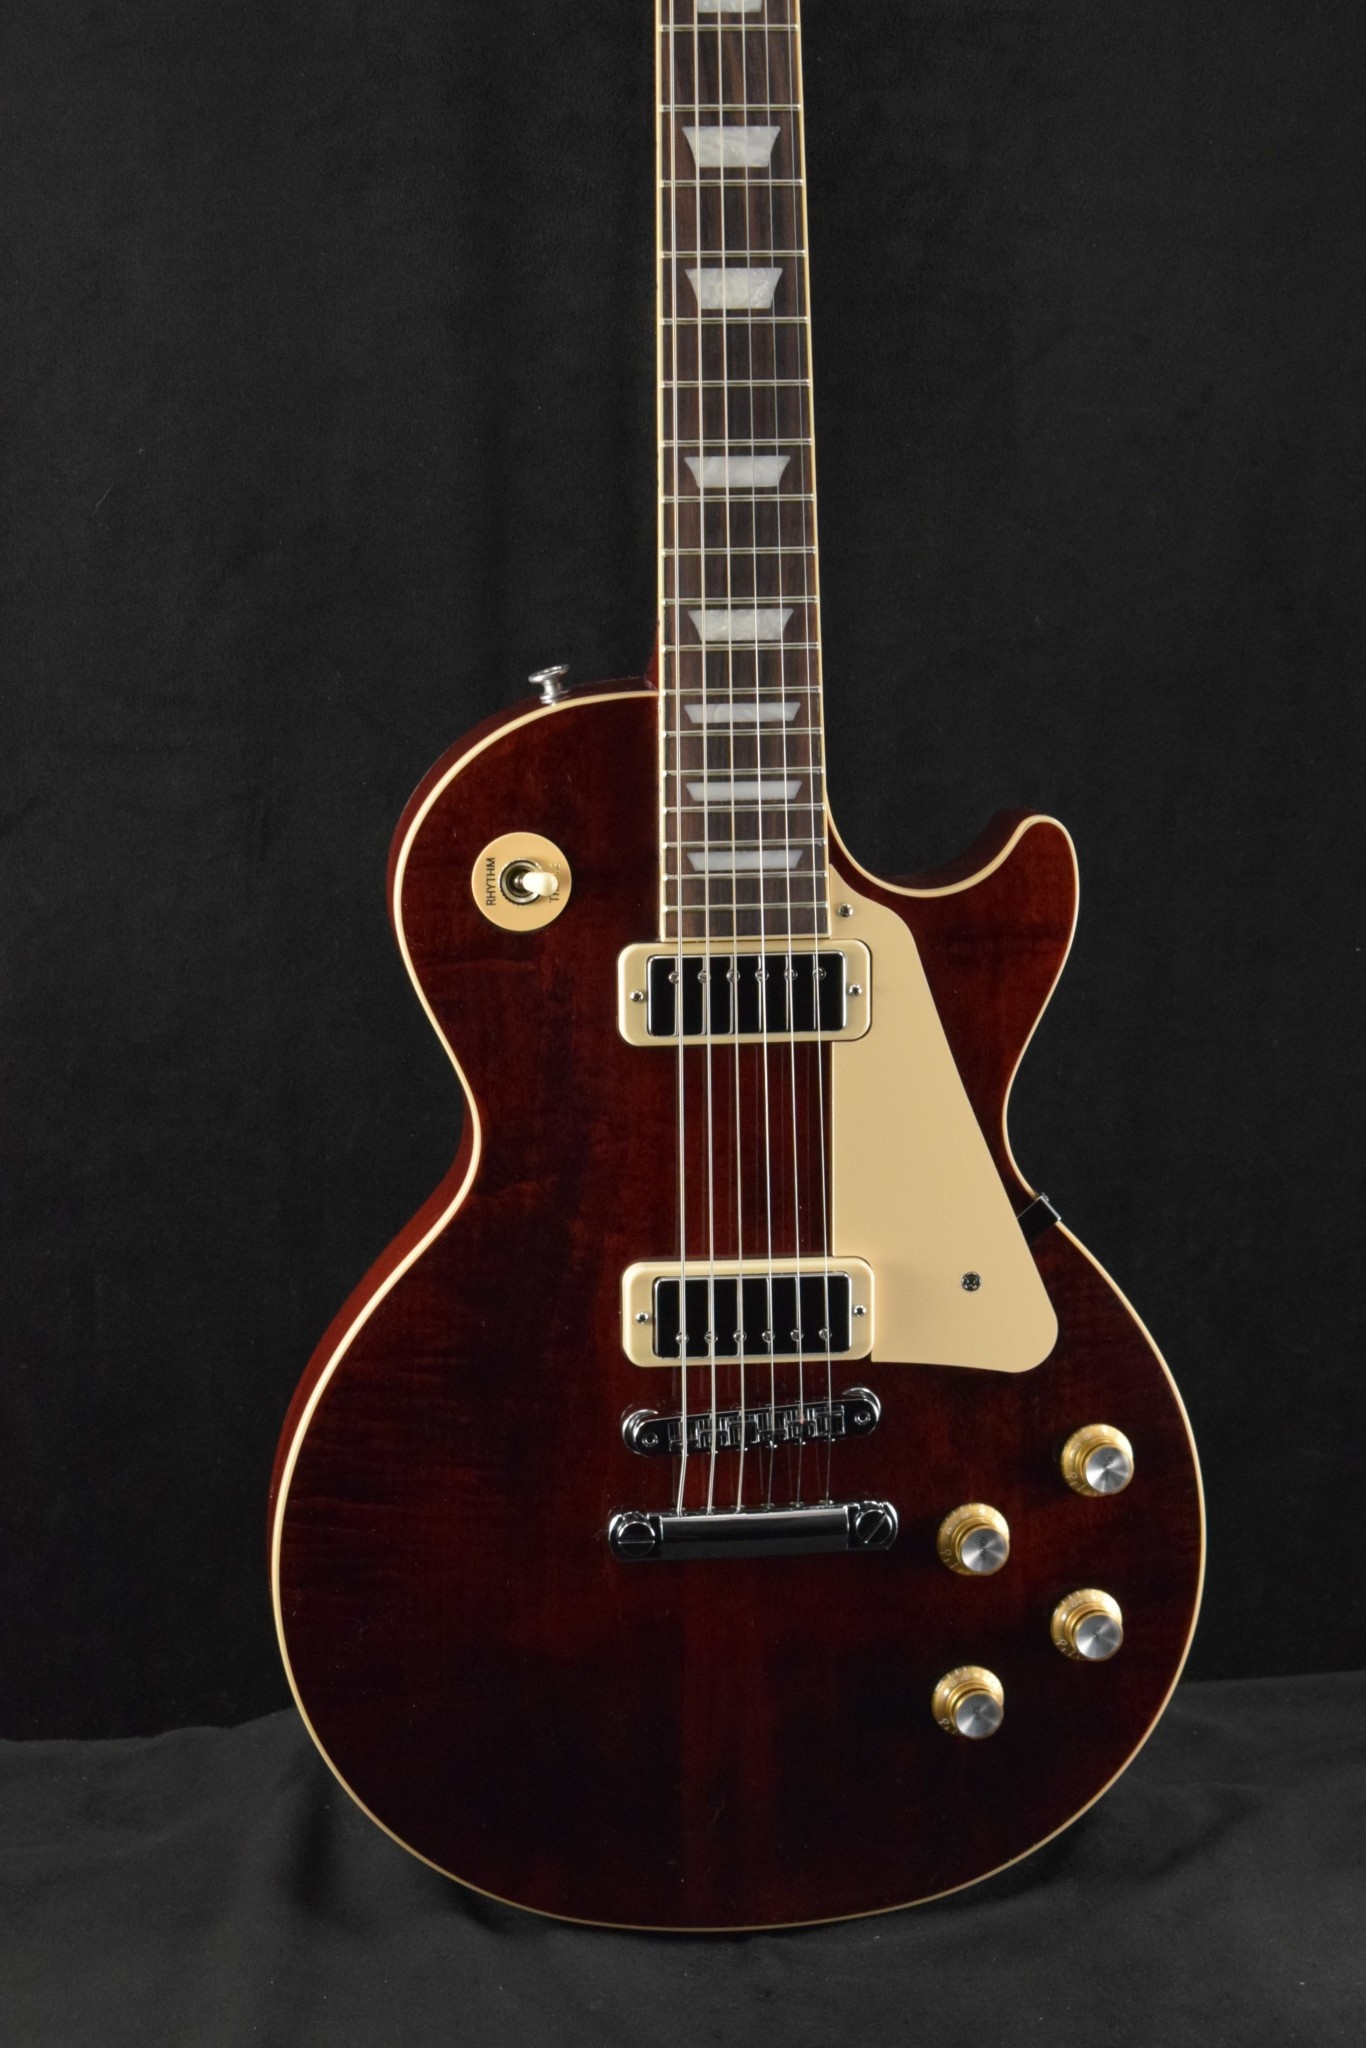 Gallo Robar a Pisoteando Gibson Original Les Paul 70s Deluxe Wine Red - Fuller's Guitar